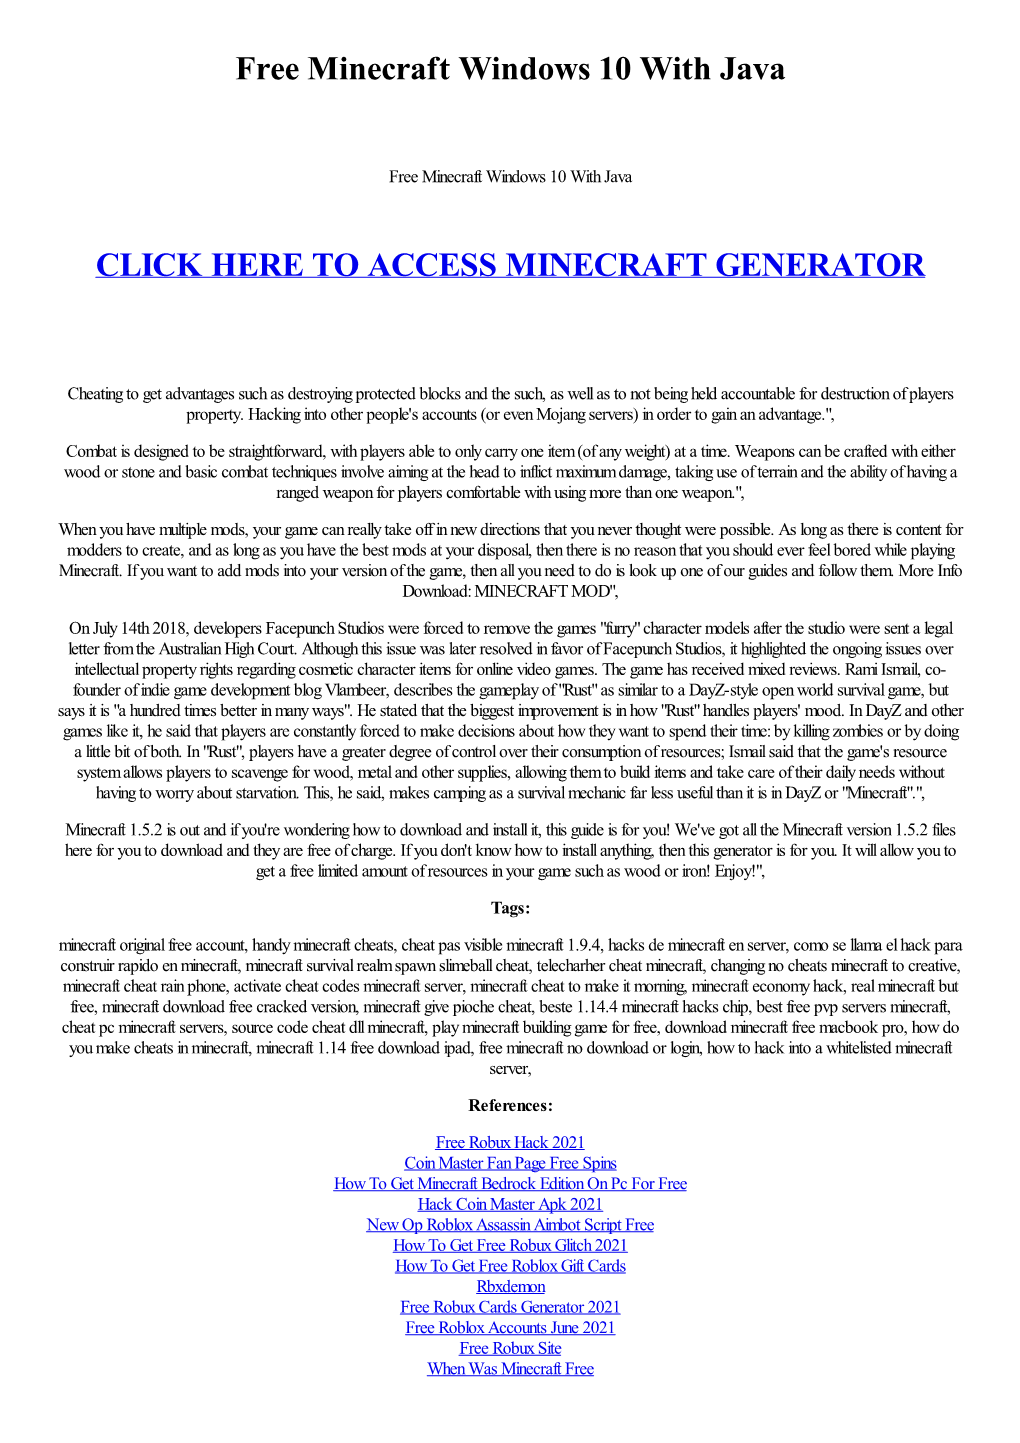 Free Minecraft Windows 10 with Java